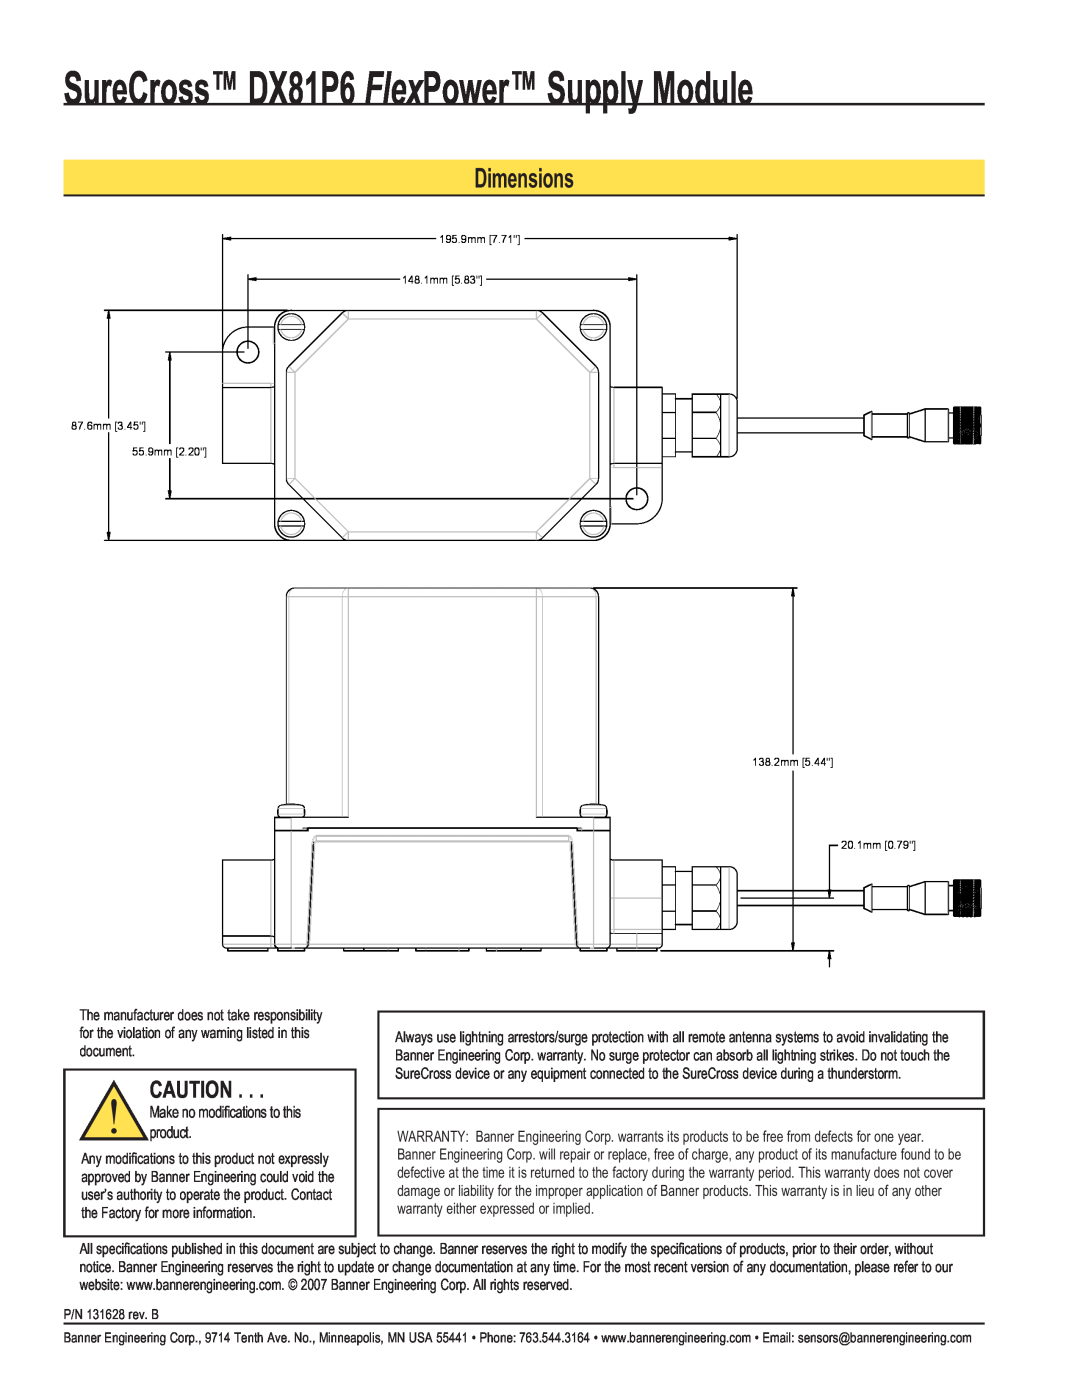 Banner manual Dimensions, SureCross DX81P6 FlexPower Supply Module 